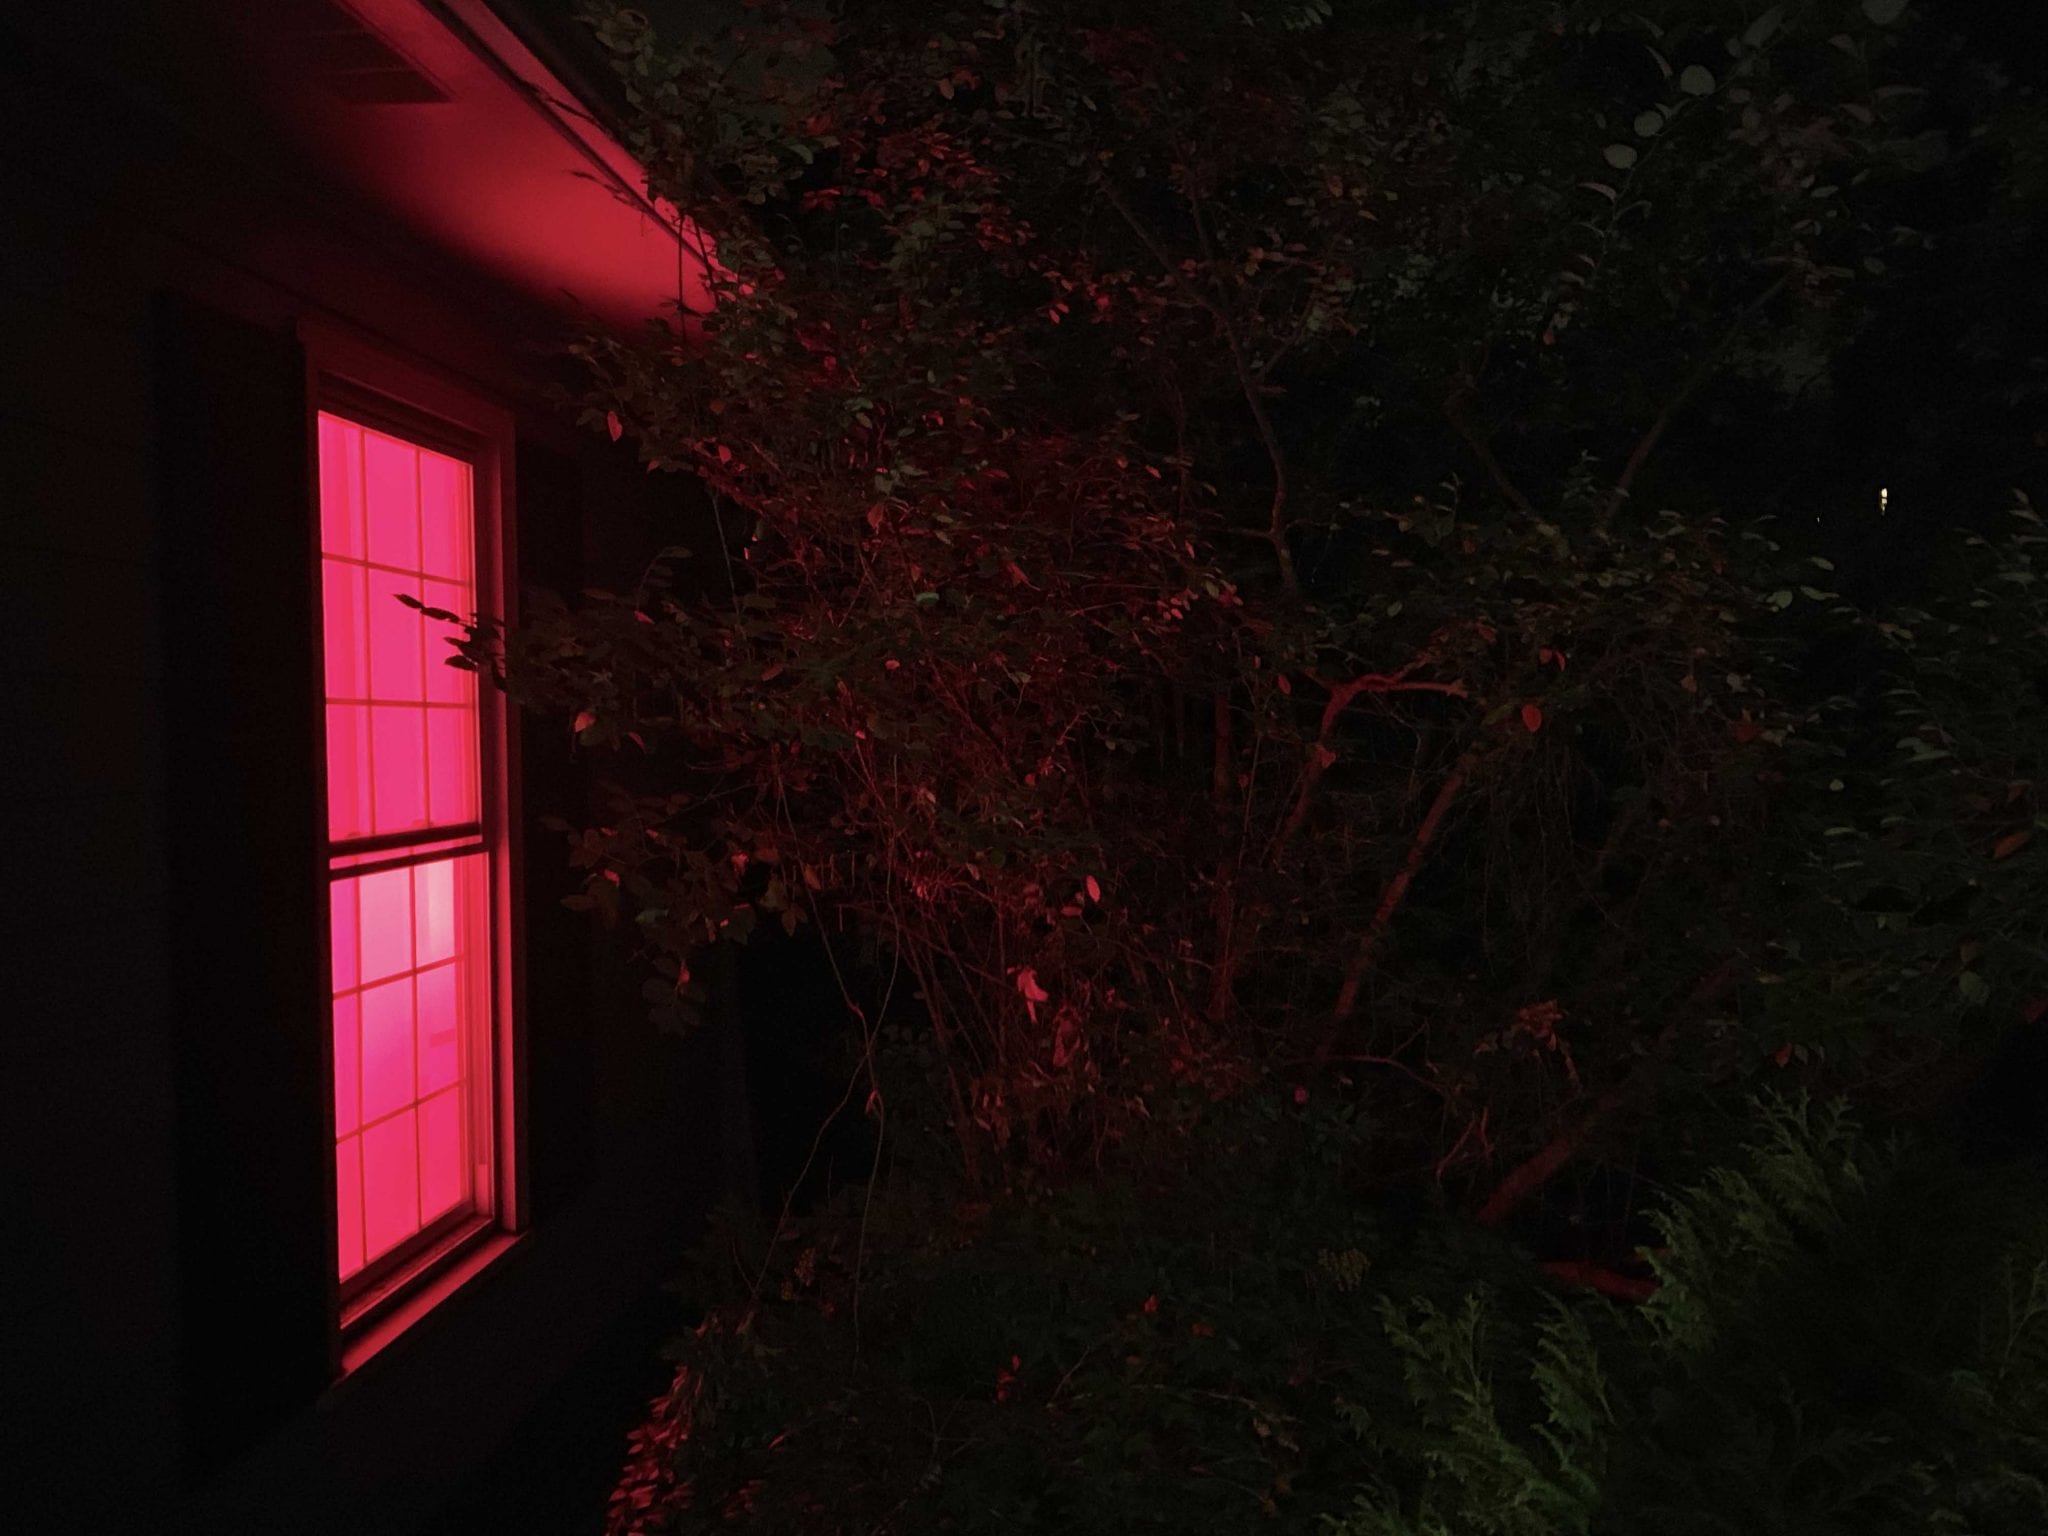 Red Light Window